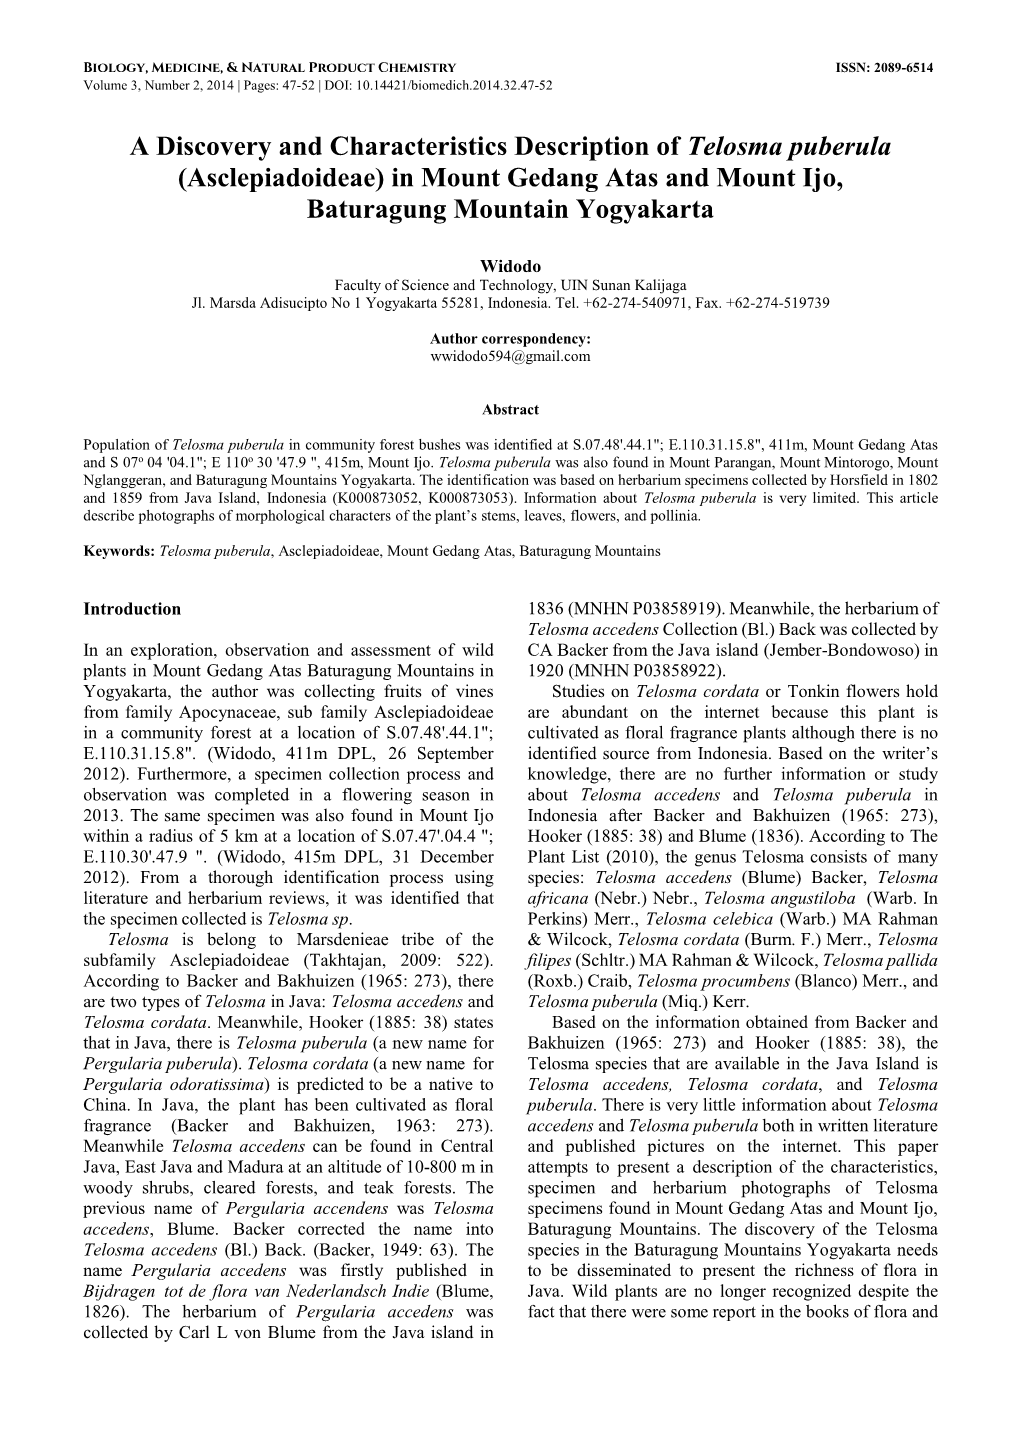 A Discovery and Characteristics Description of Telosma Puberula (Asclepiadoideae) in Mount Gedang Atas and Mount Ijo, Baturagung Mountain Yogyakarta